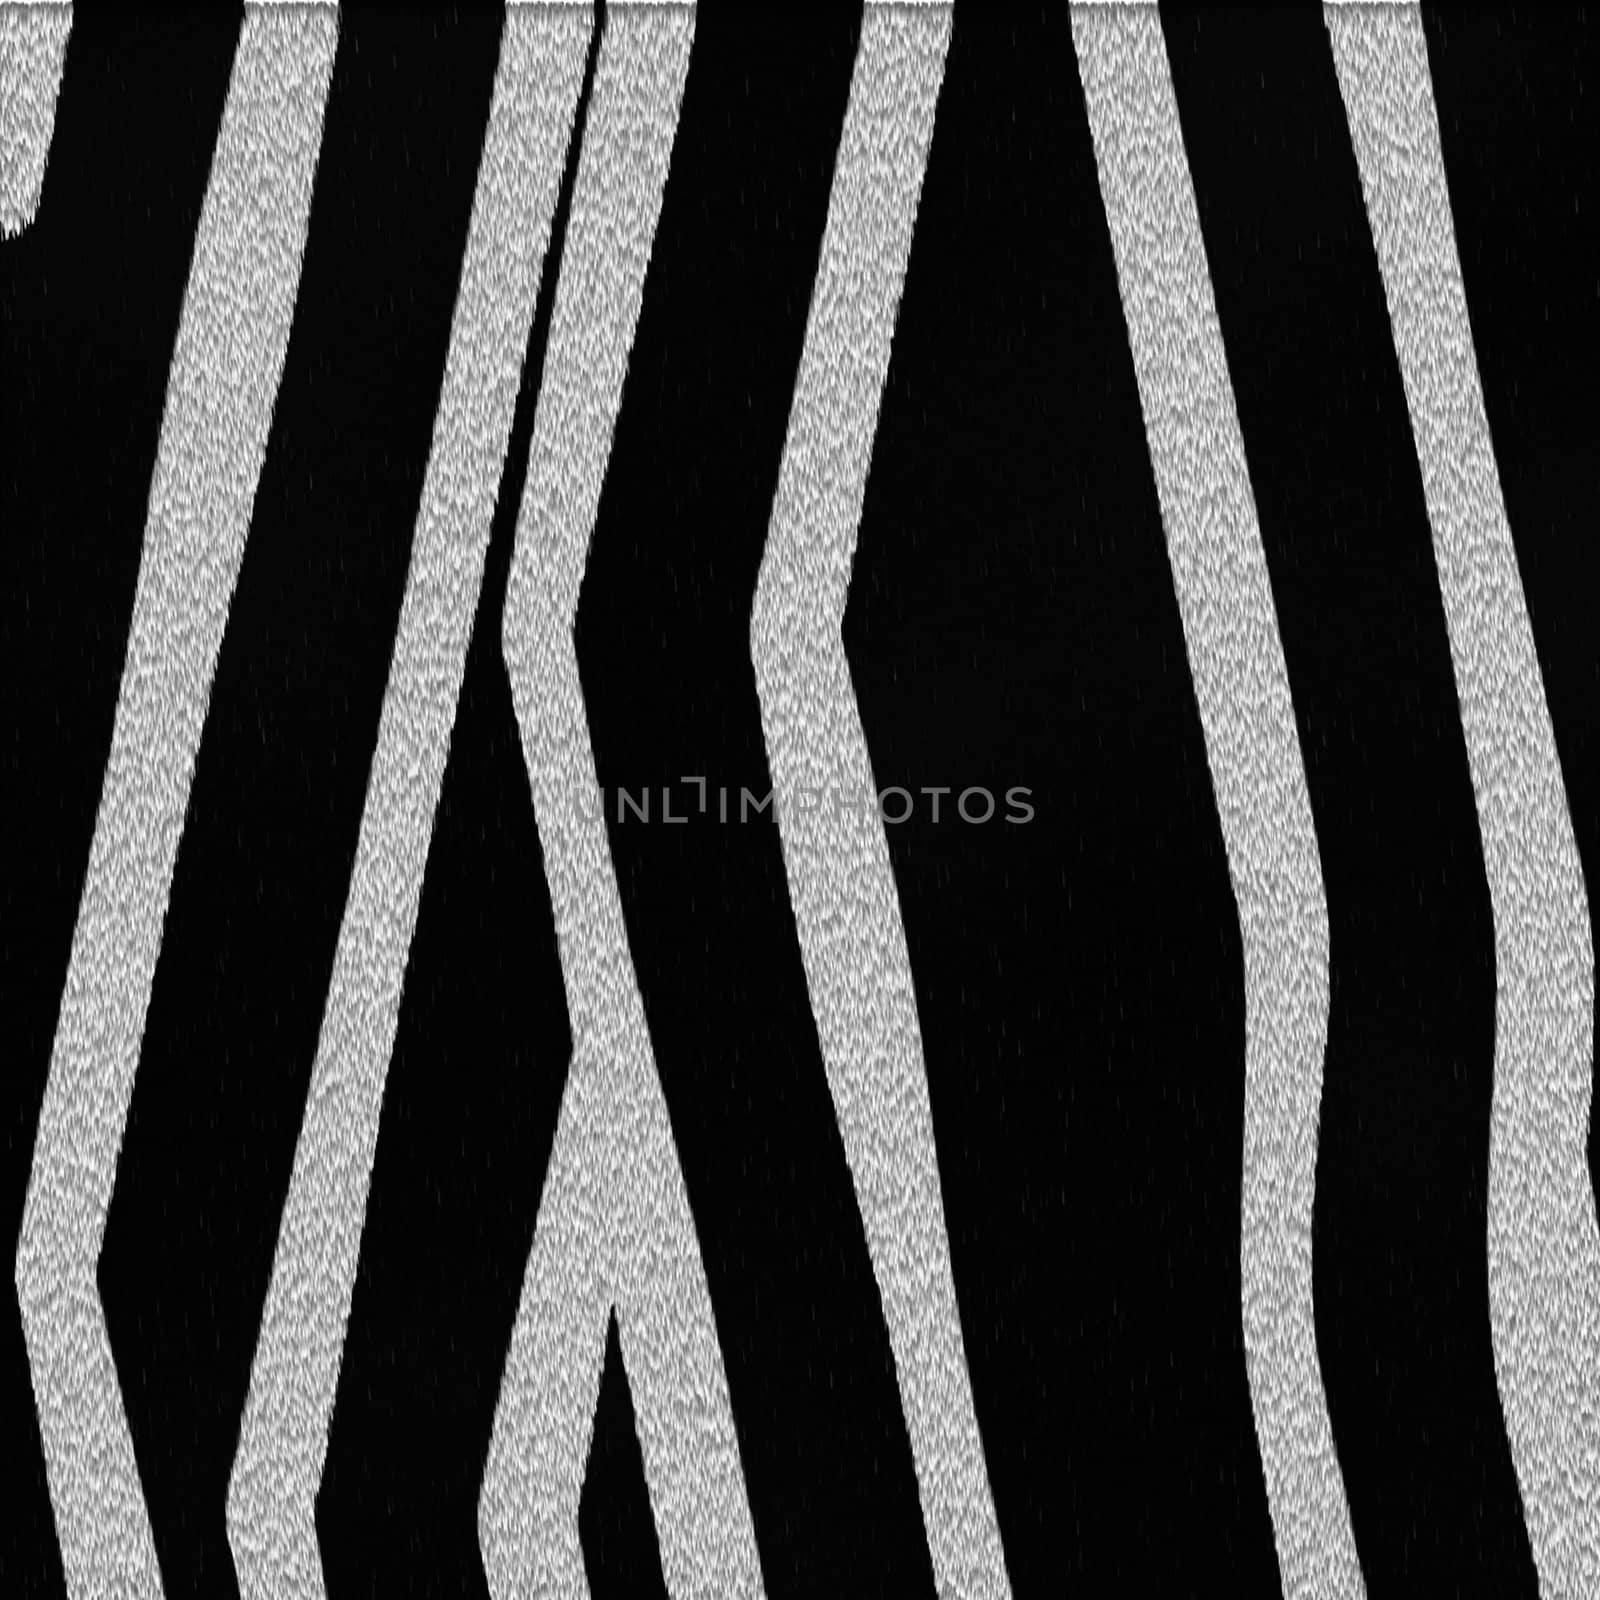 zebra texture